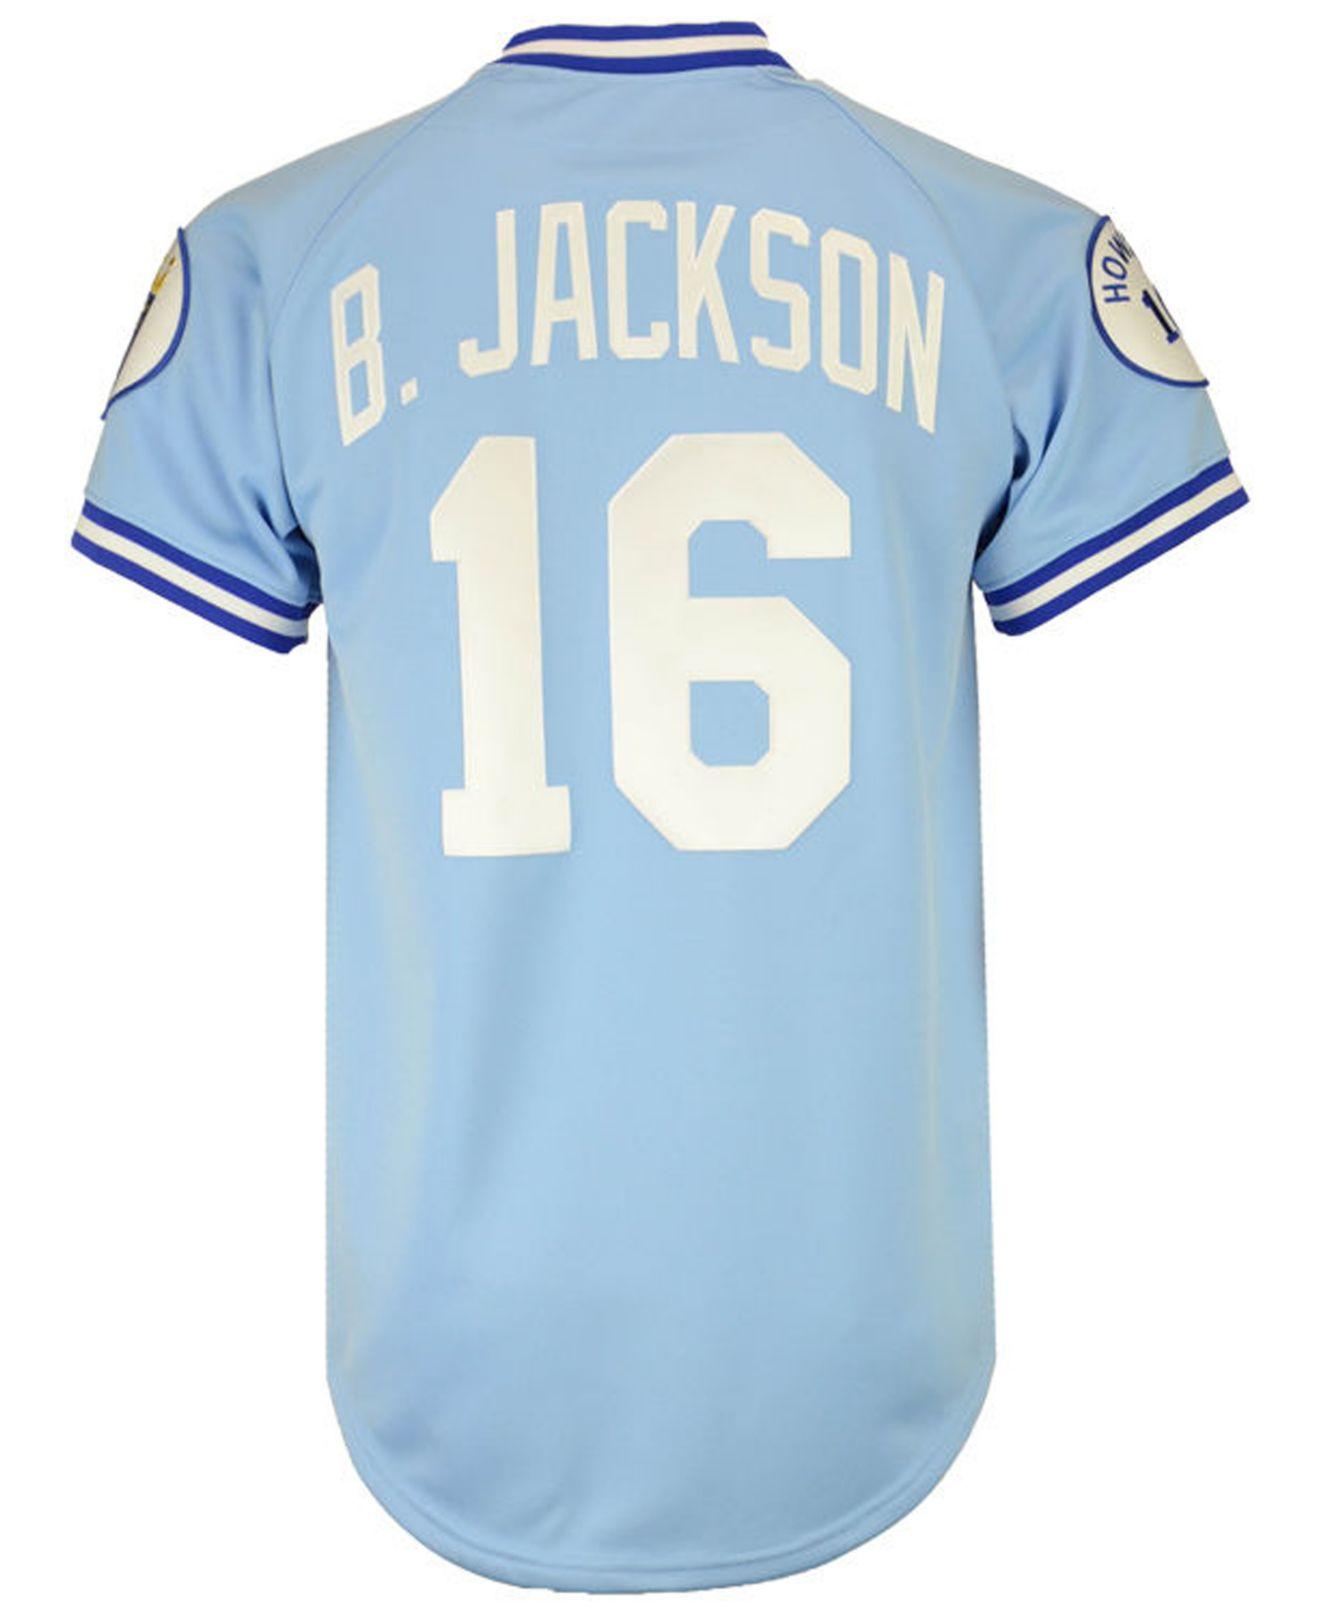 bo jackson royals jersey blue